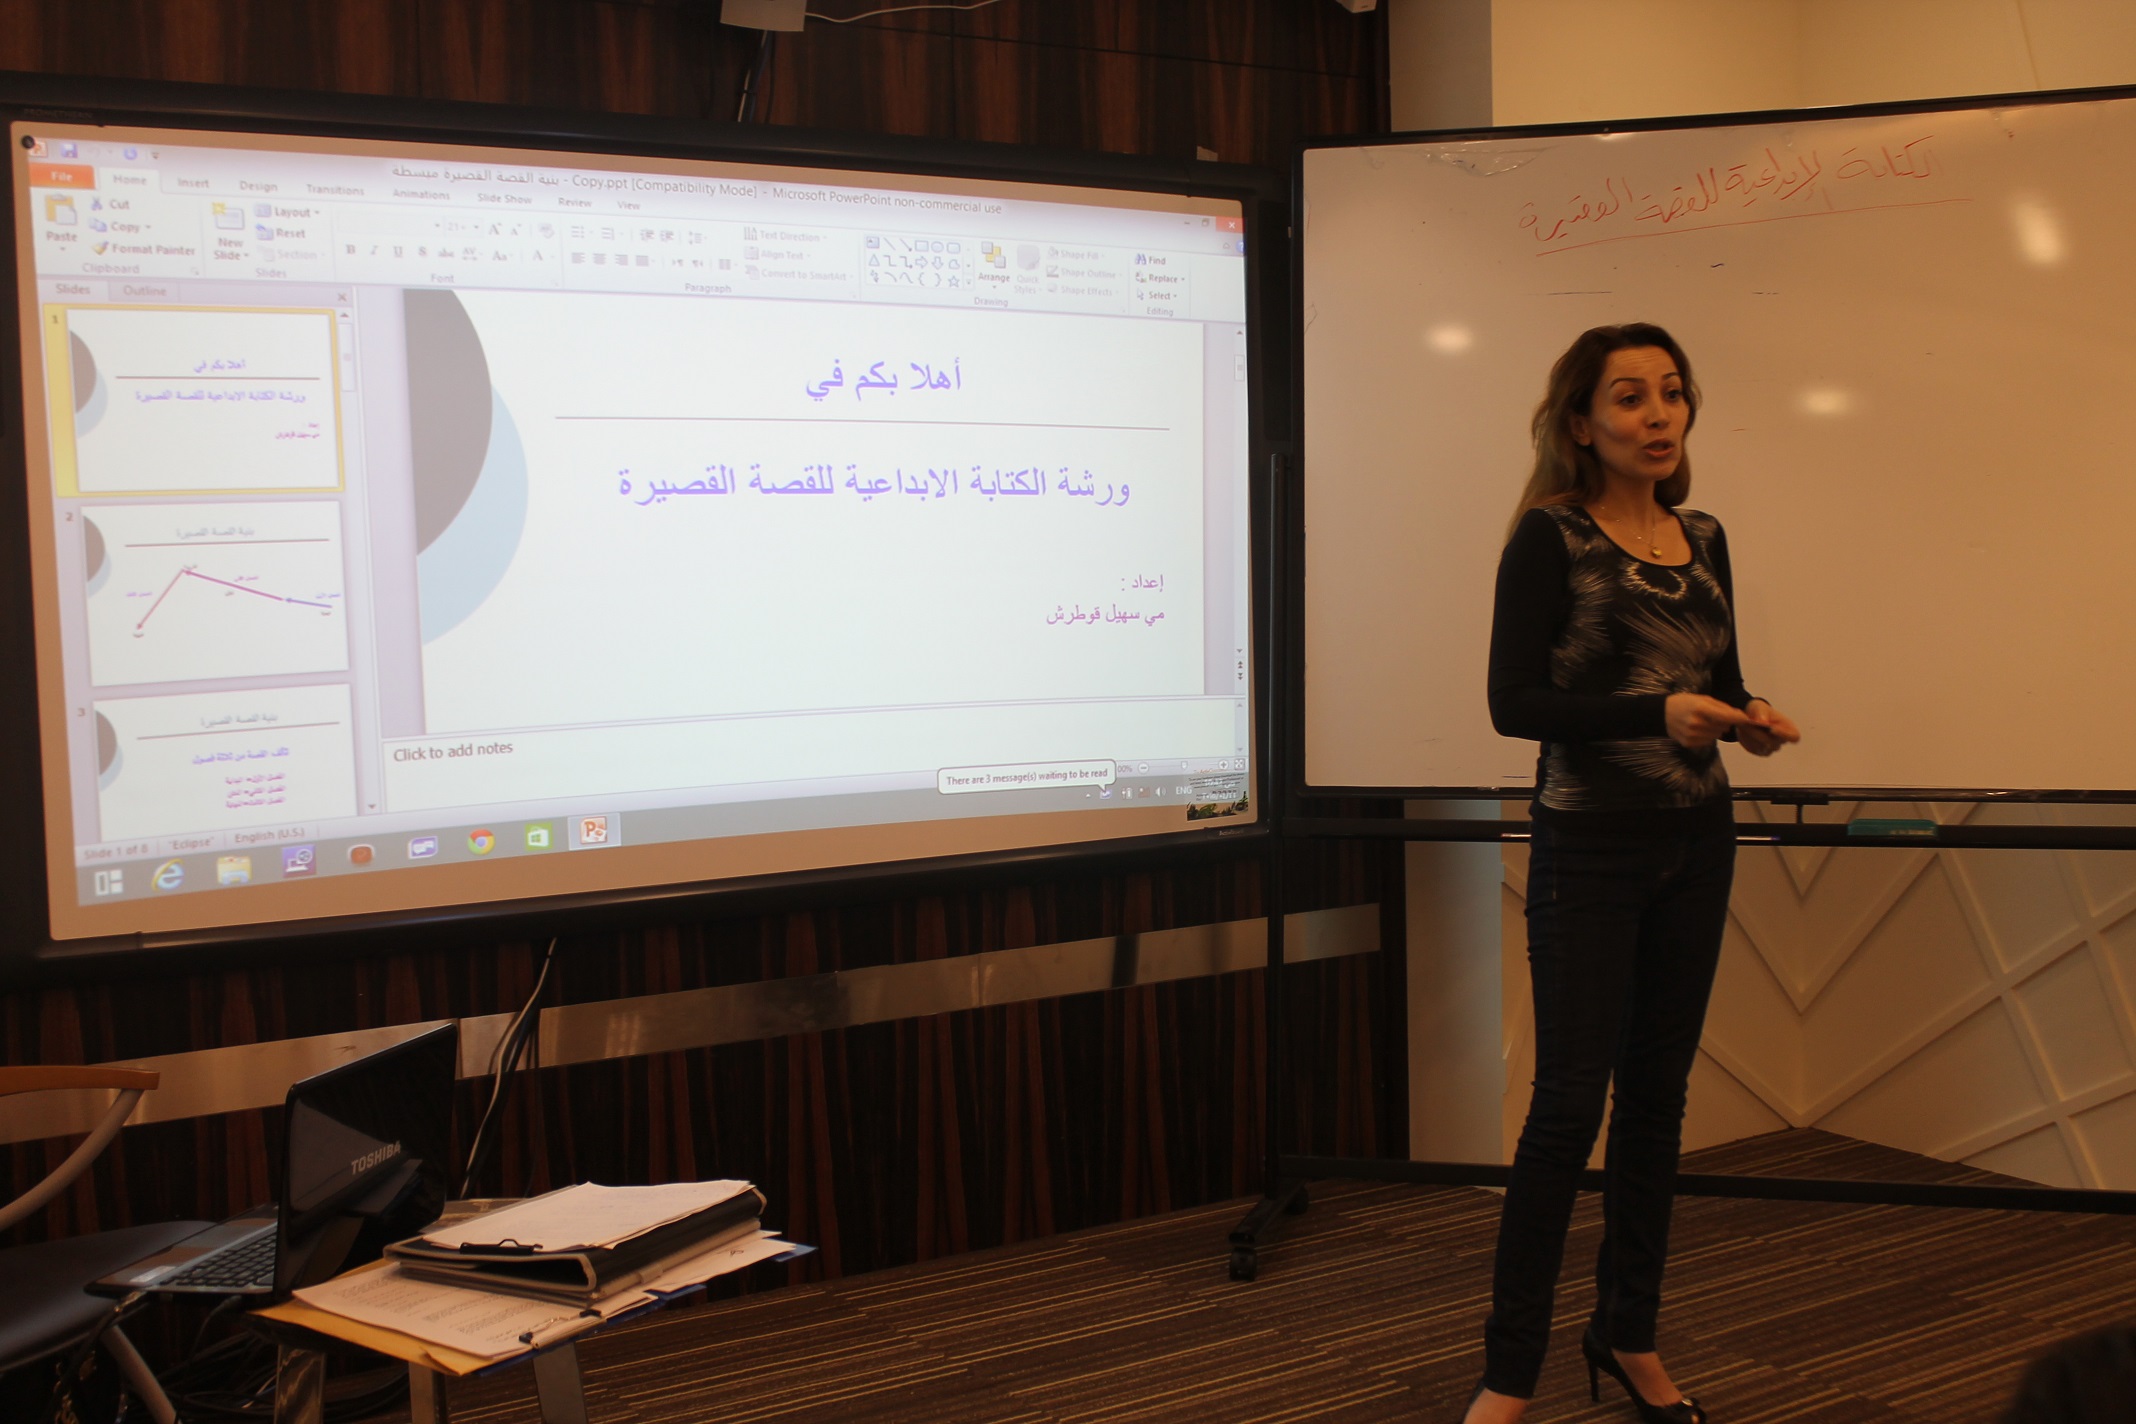 A workshop titled "Short Story Creative Writing" at Al Ain University